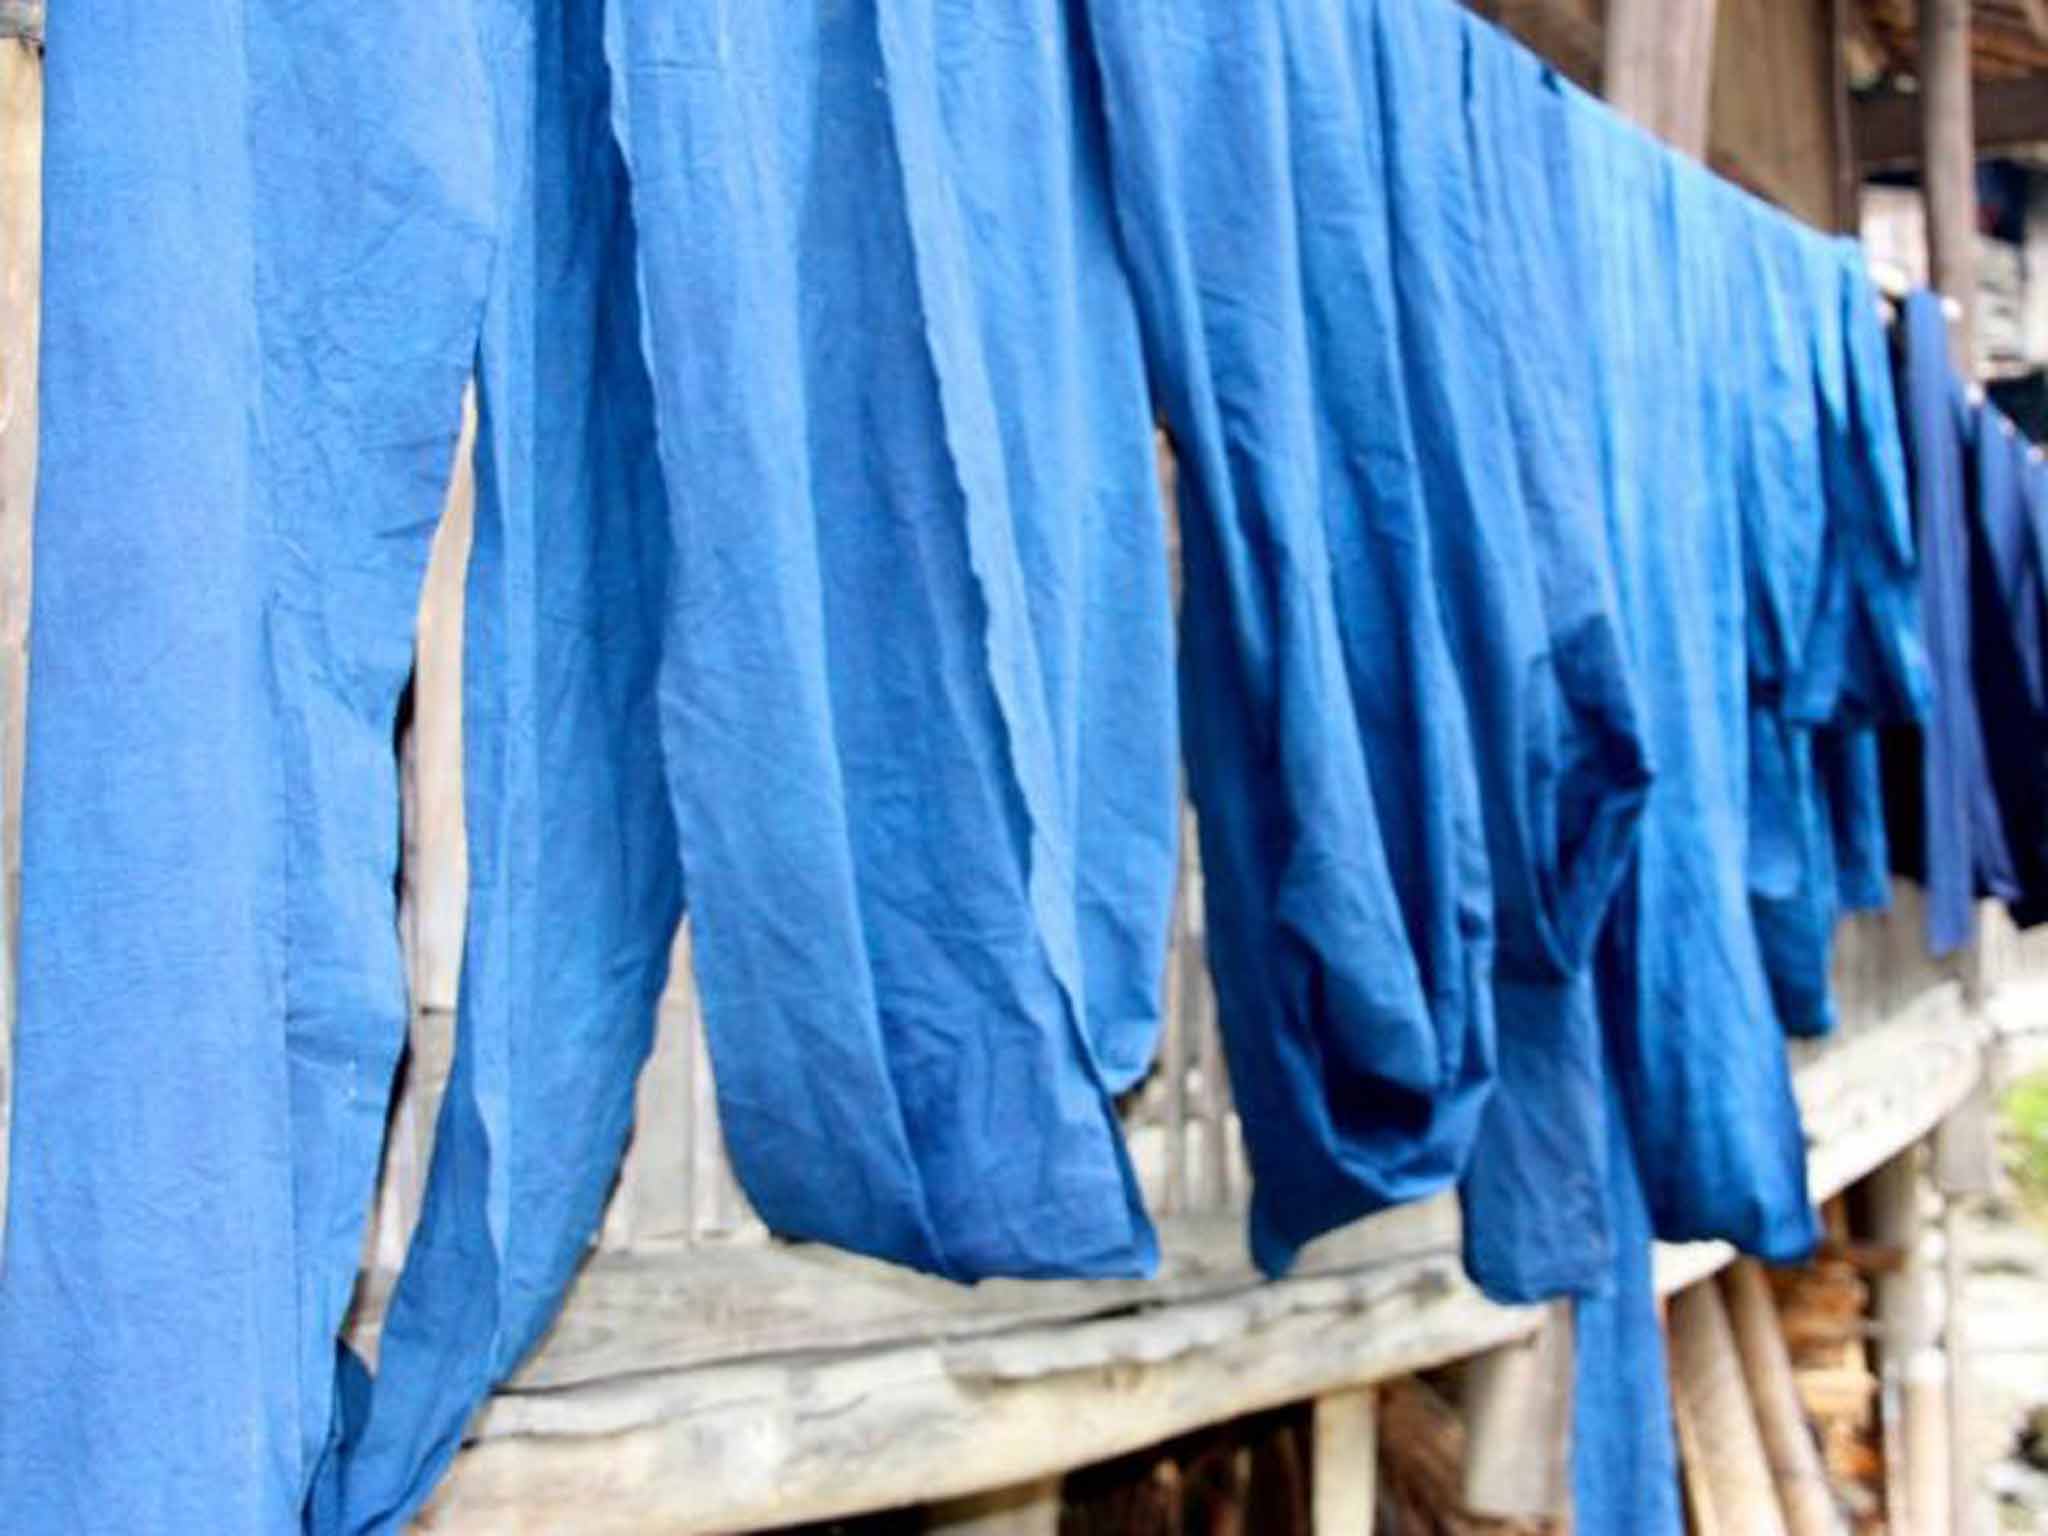 Feeling blue: the dye has ties to slavery